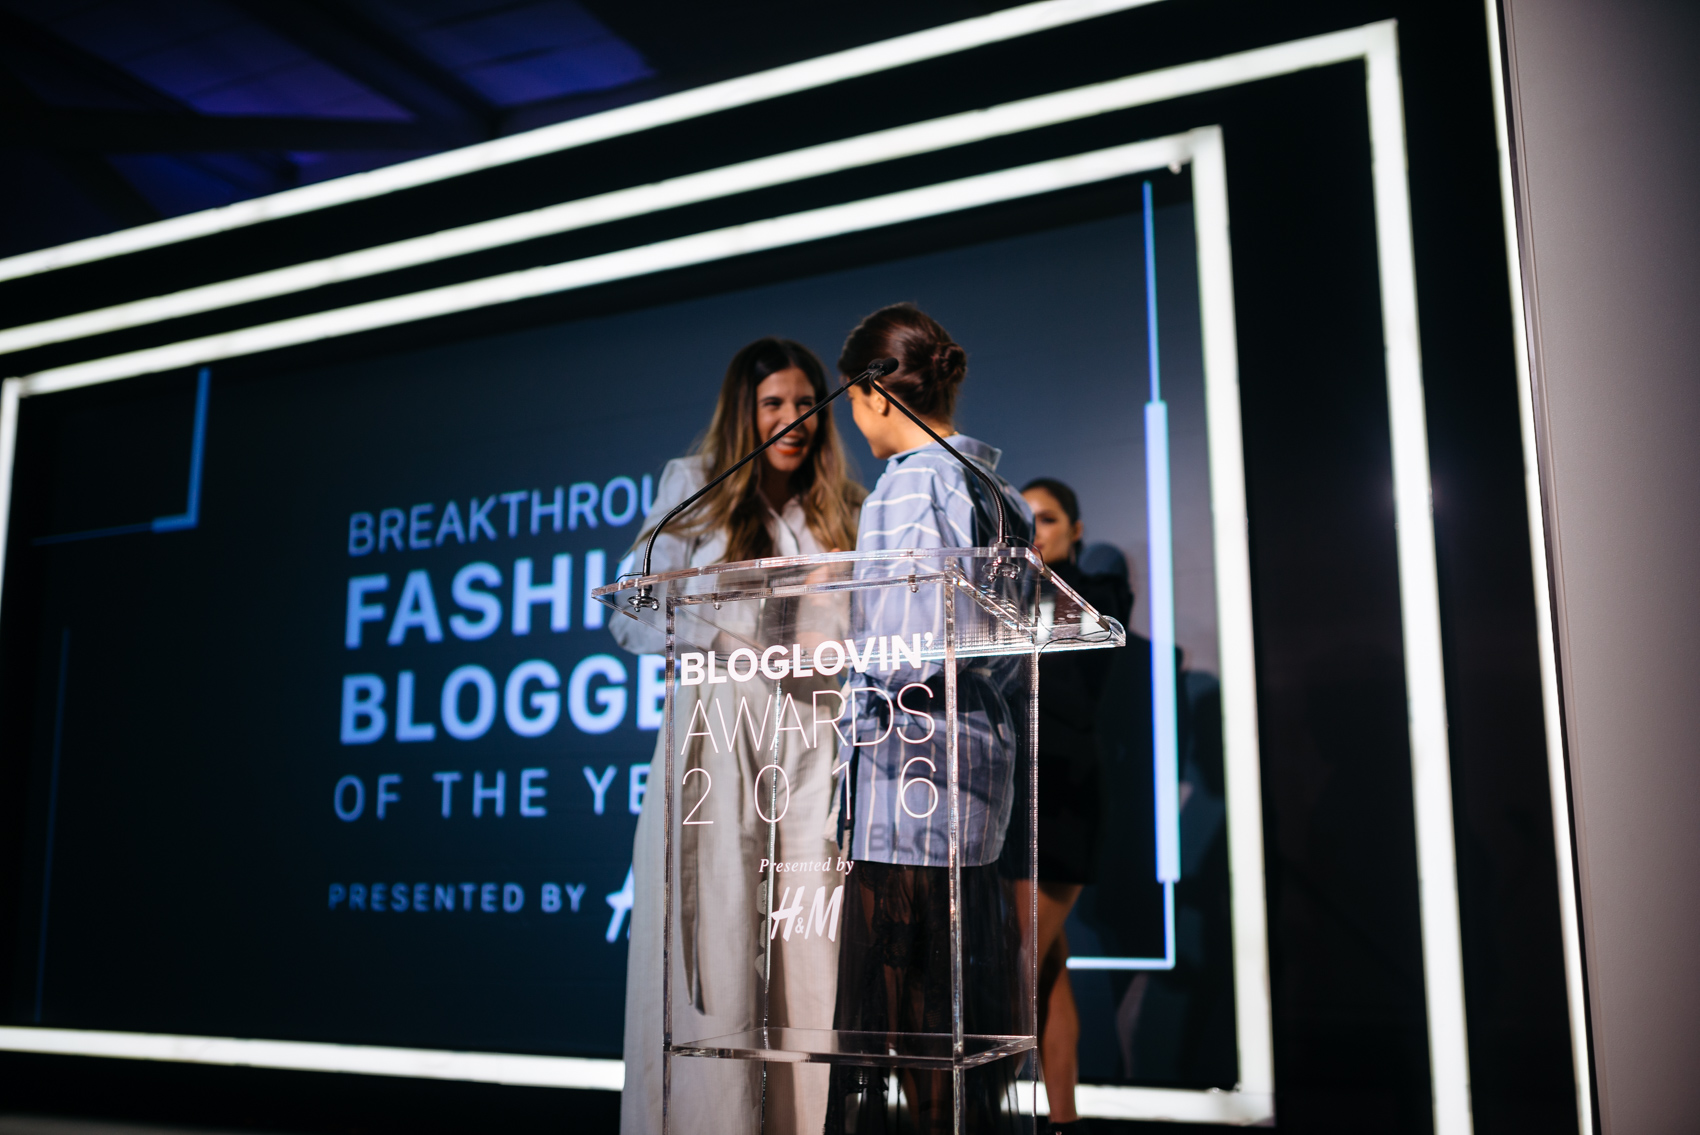 Maristella Gonzalez and Leandra Medine at the Bloglovin Awards 2016